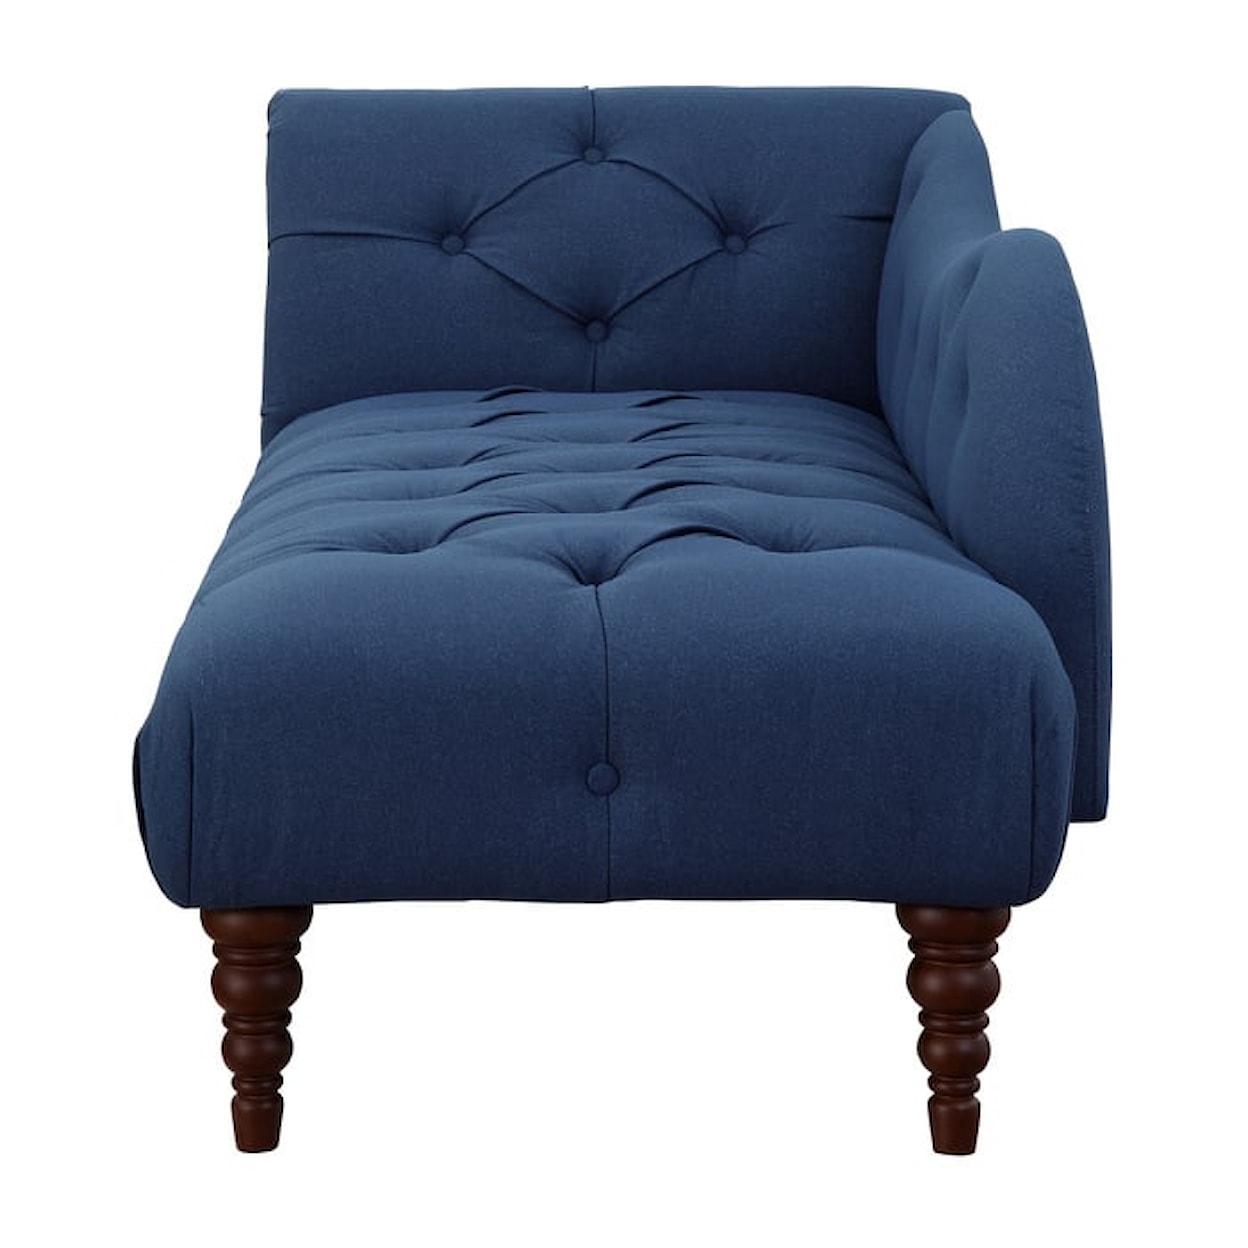 Homelegance Furniture Hill Blue Chaise